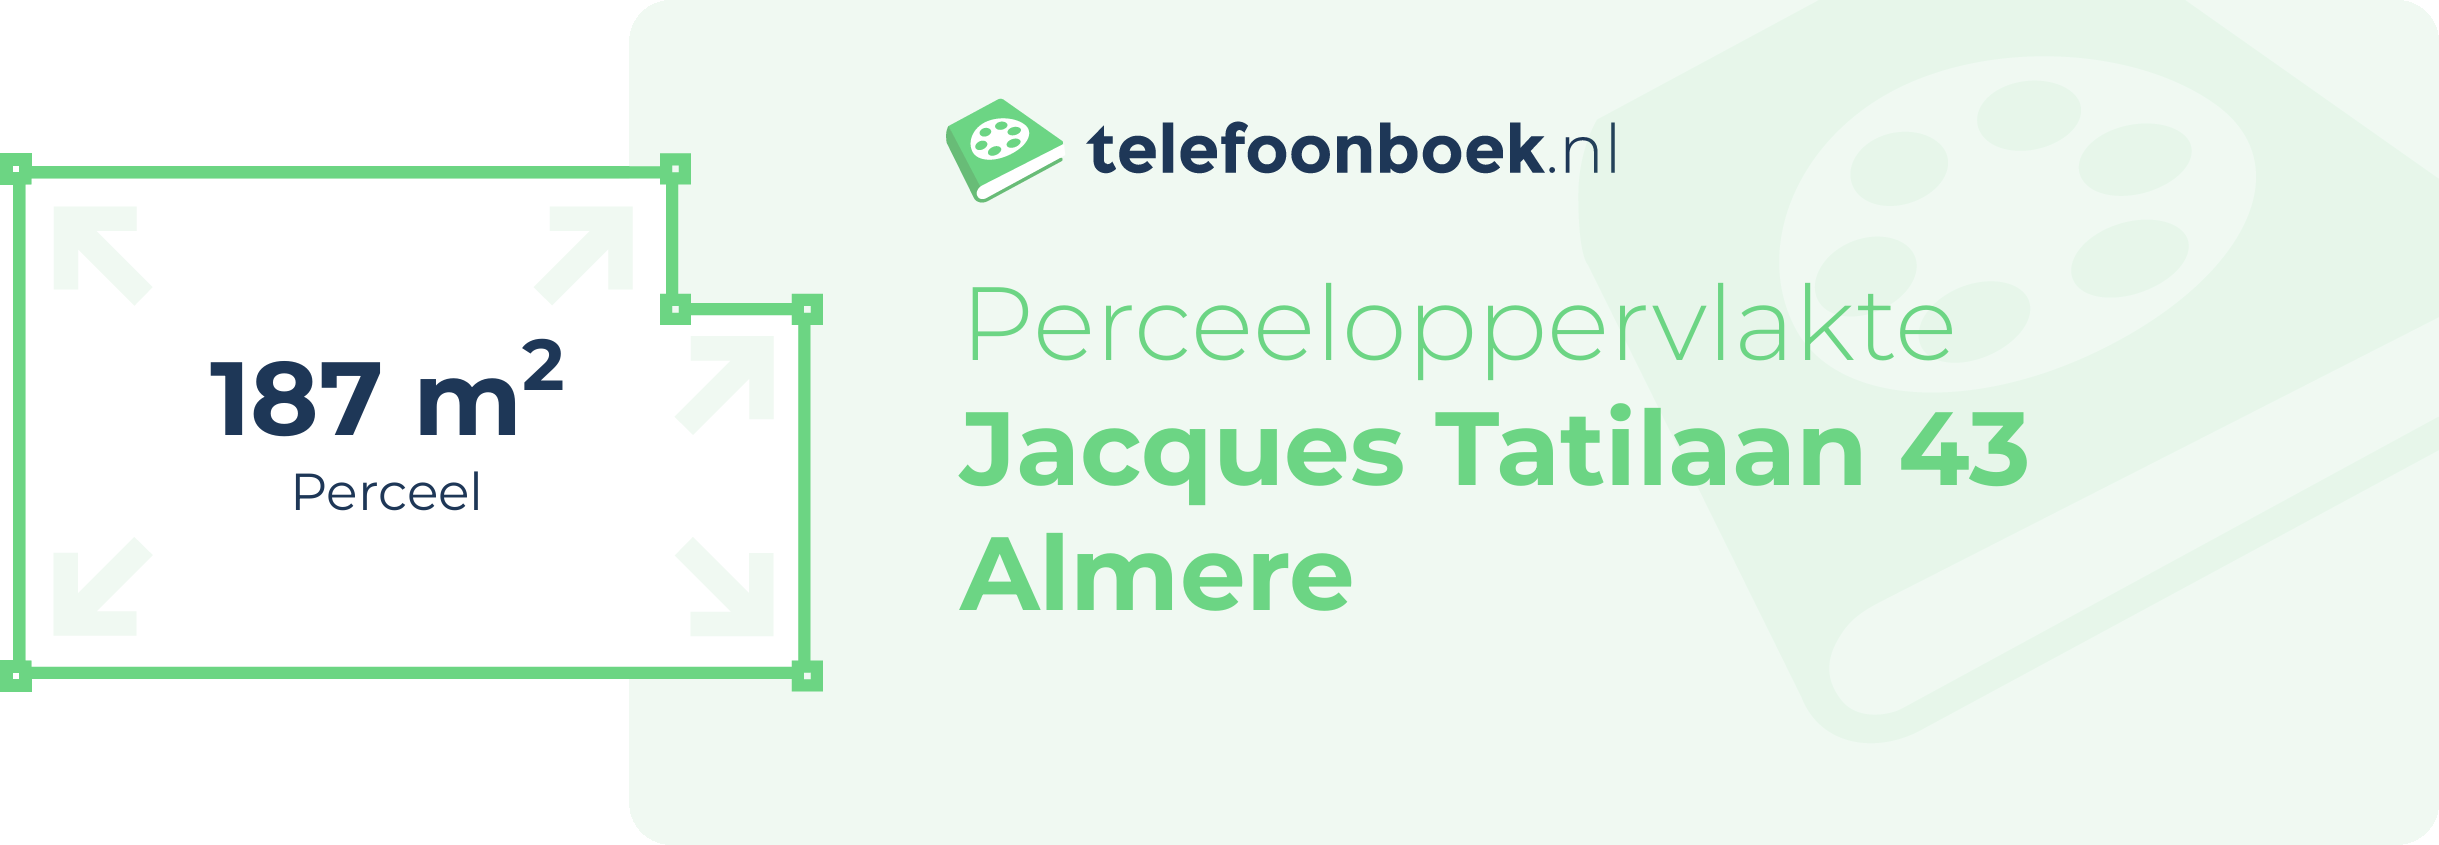 Perceeloppervlakte Jacques Tatilaan 43 Almere